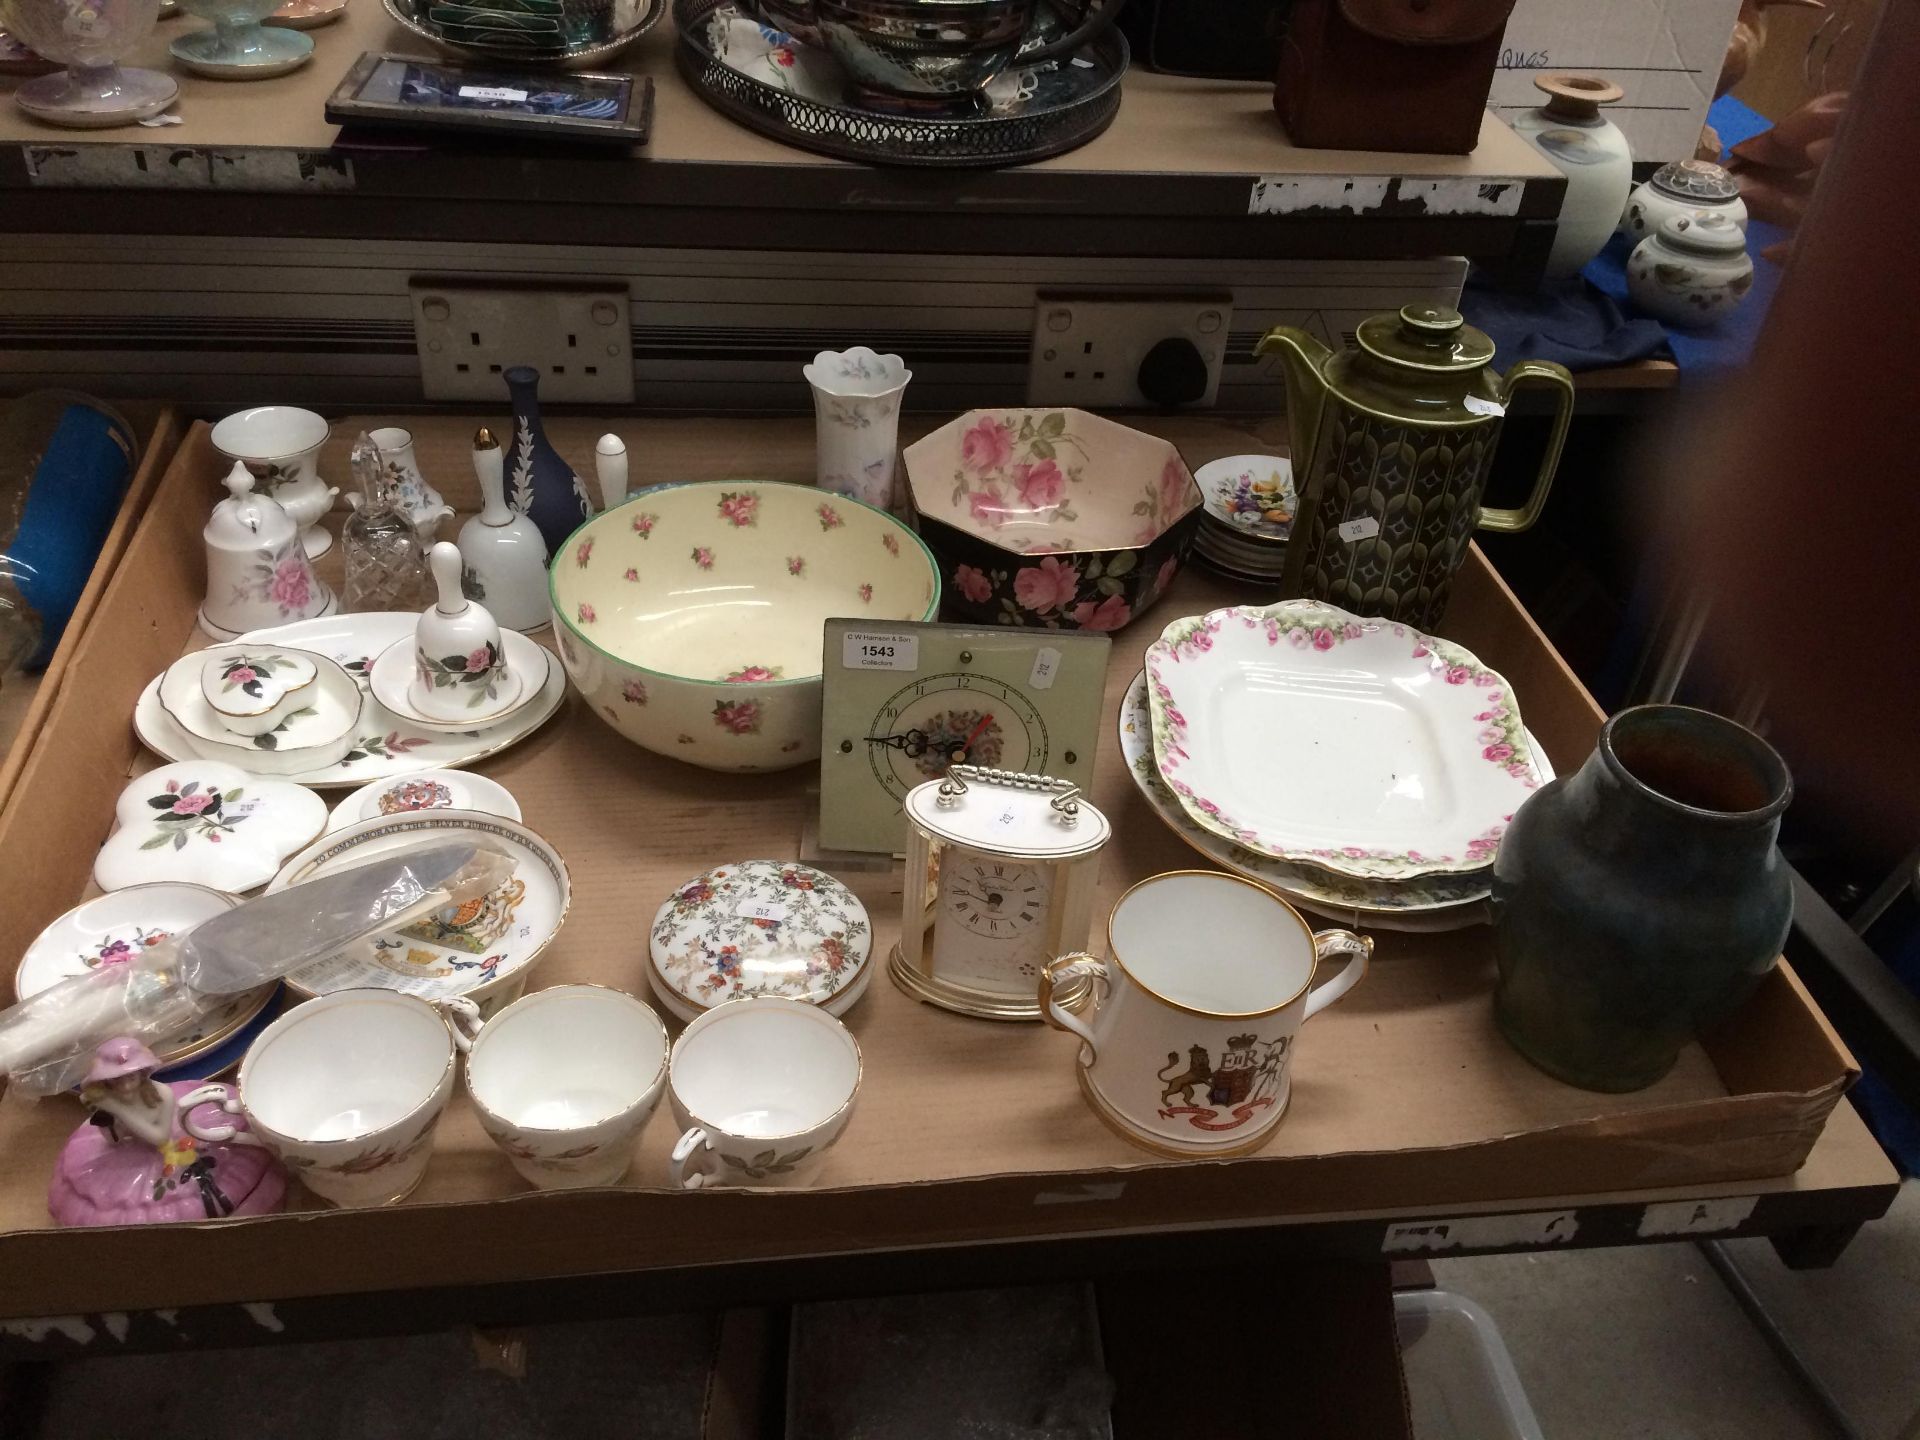 Contents to tray, Hornsea coffee pot, bowls, ornamental clocks,